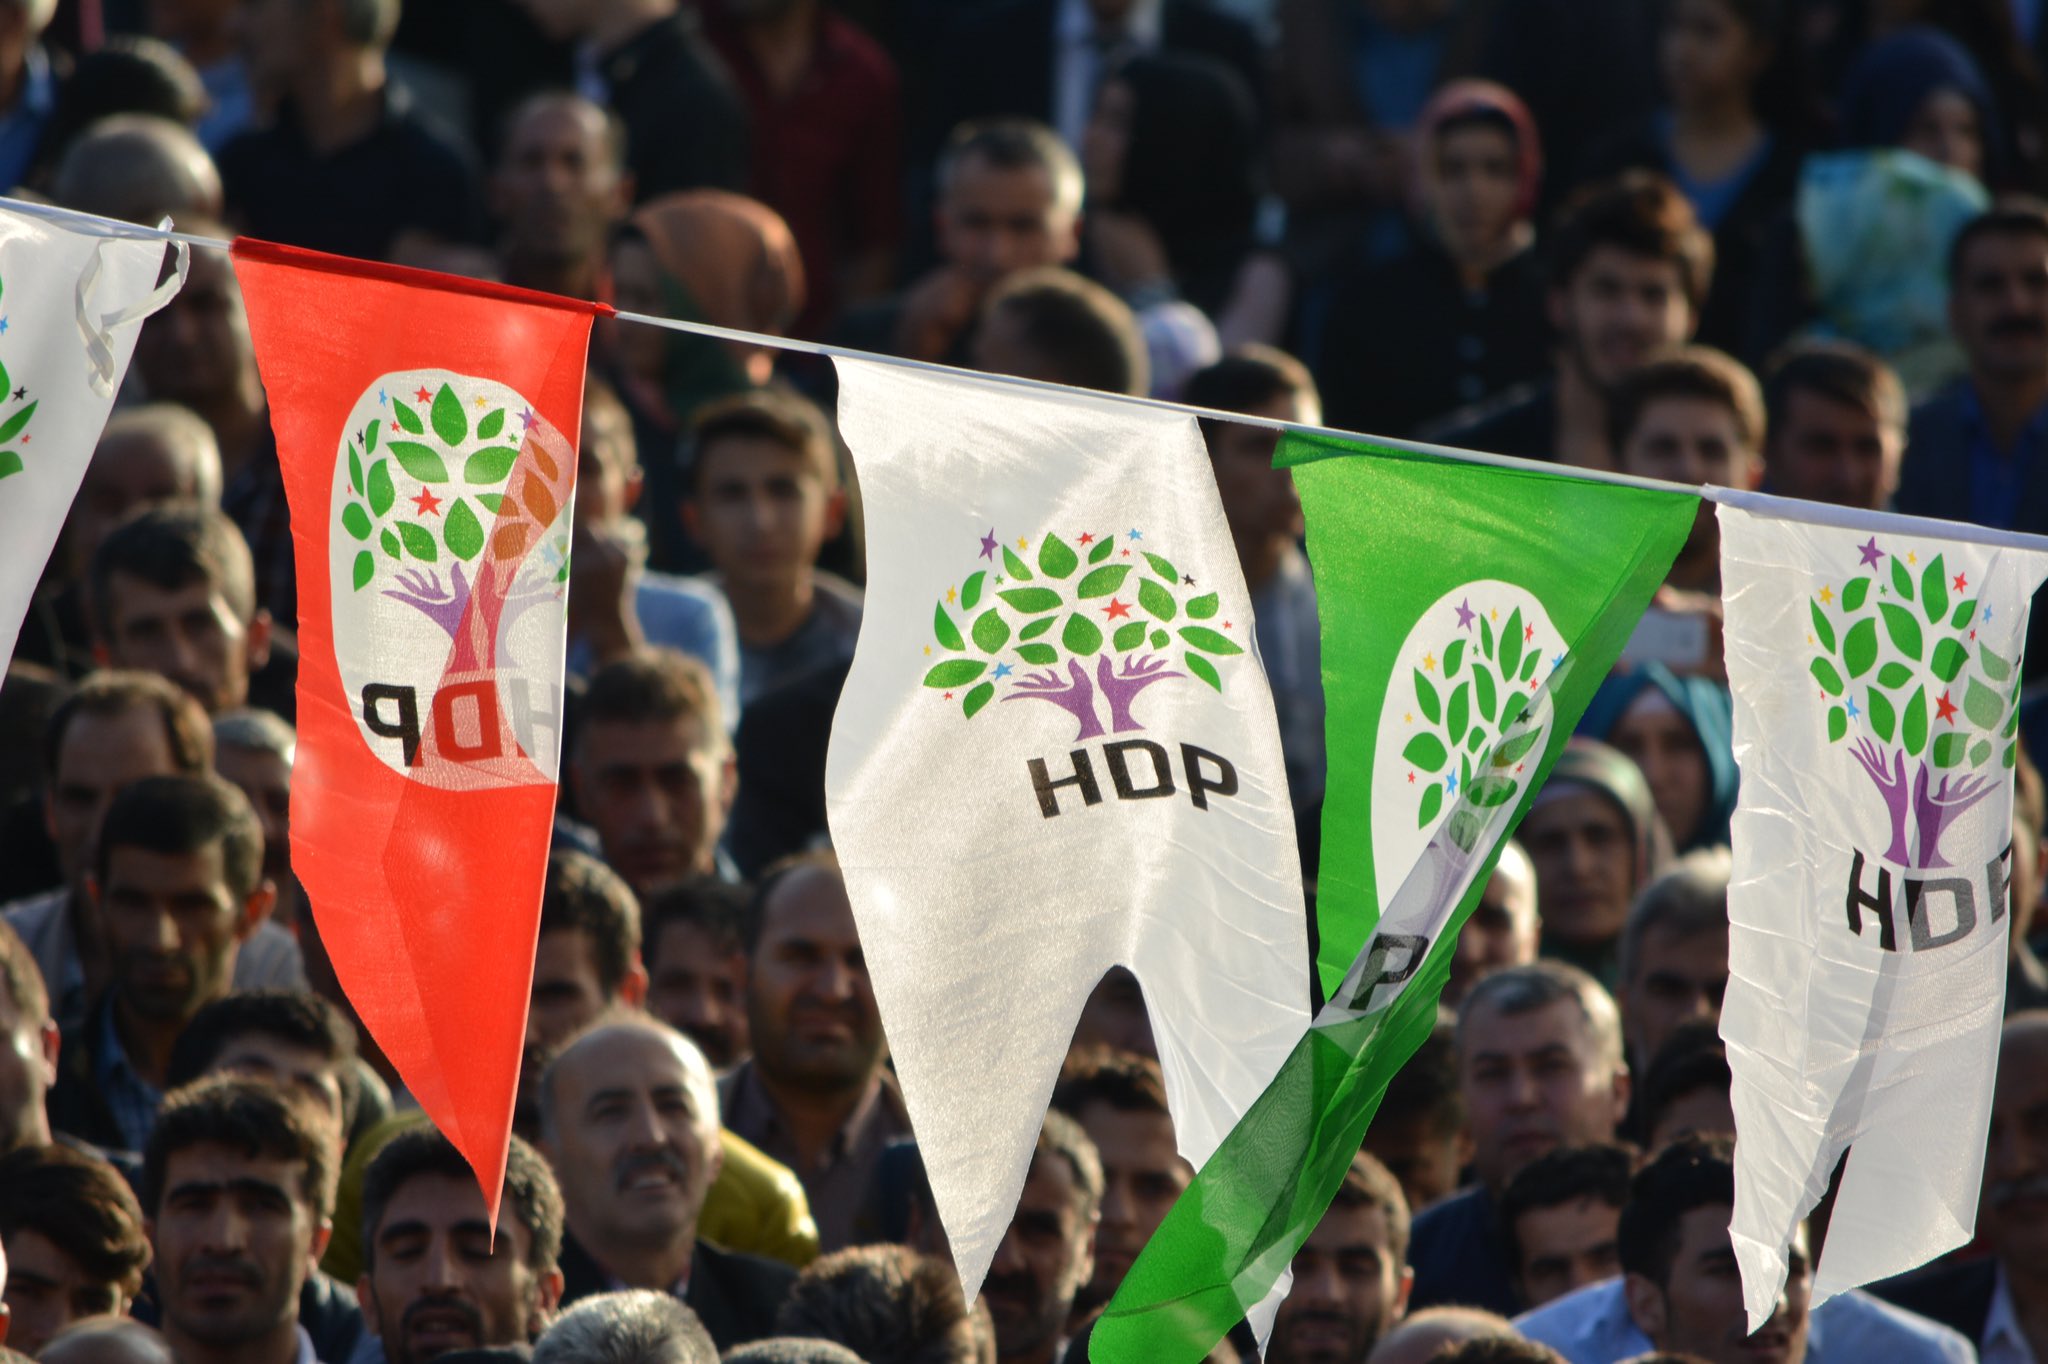 hdp rally Image HDP Twitter